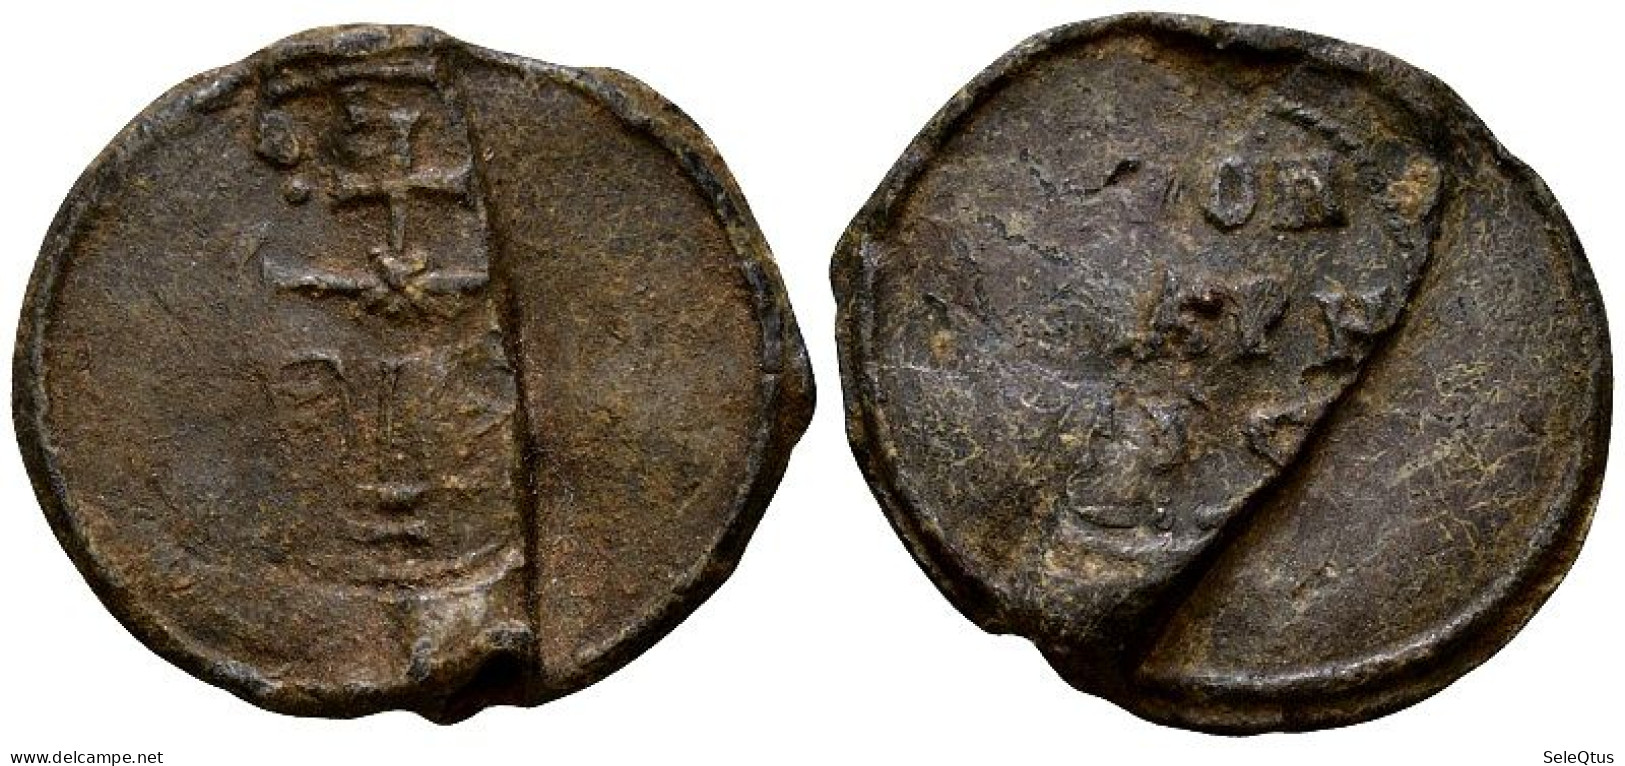 Sellos Antiguos - Ancient Seals (00130-007-1105) - Strumenti Antichi